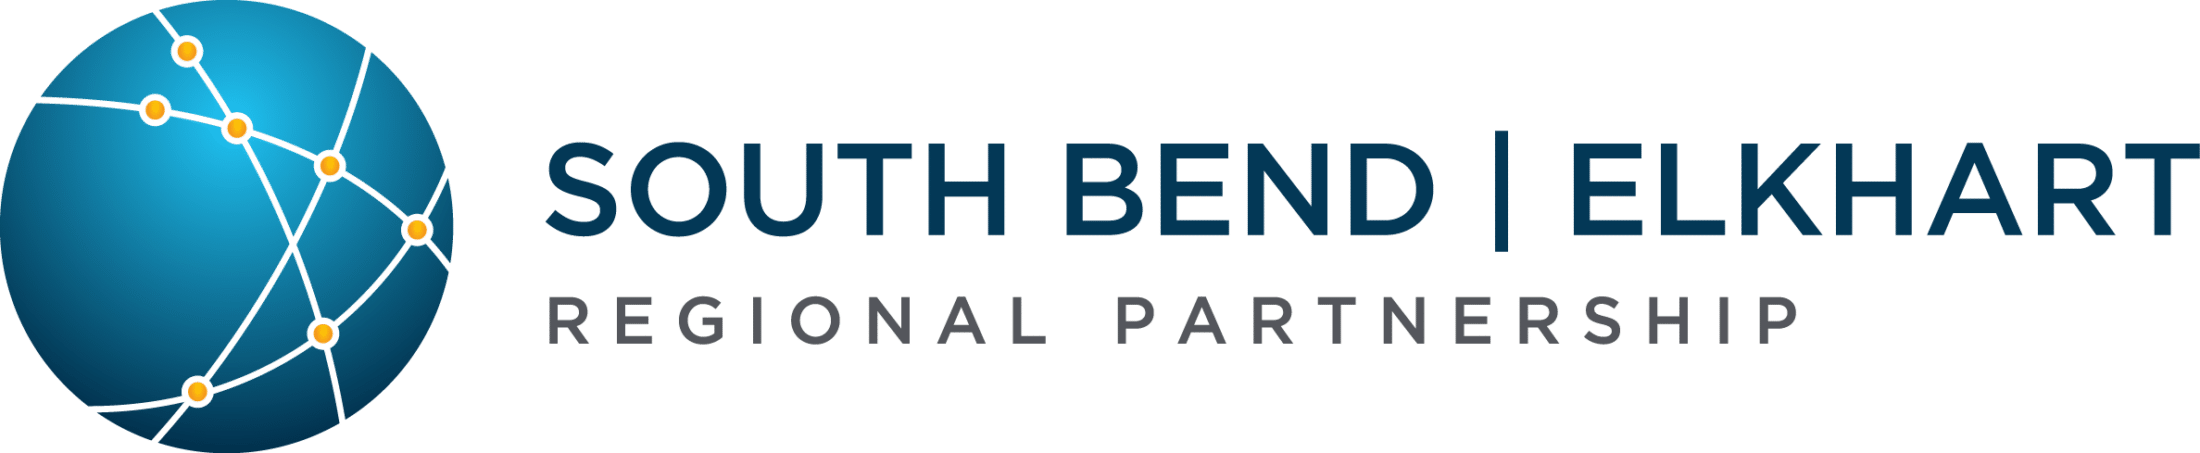 South Bend - Elkhart Regional Partnership